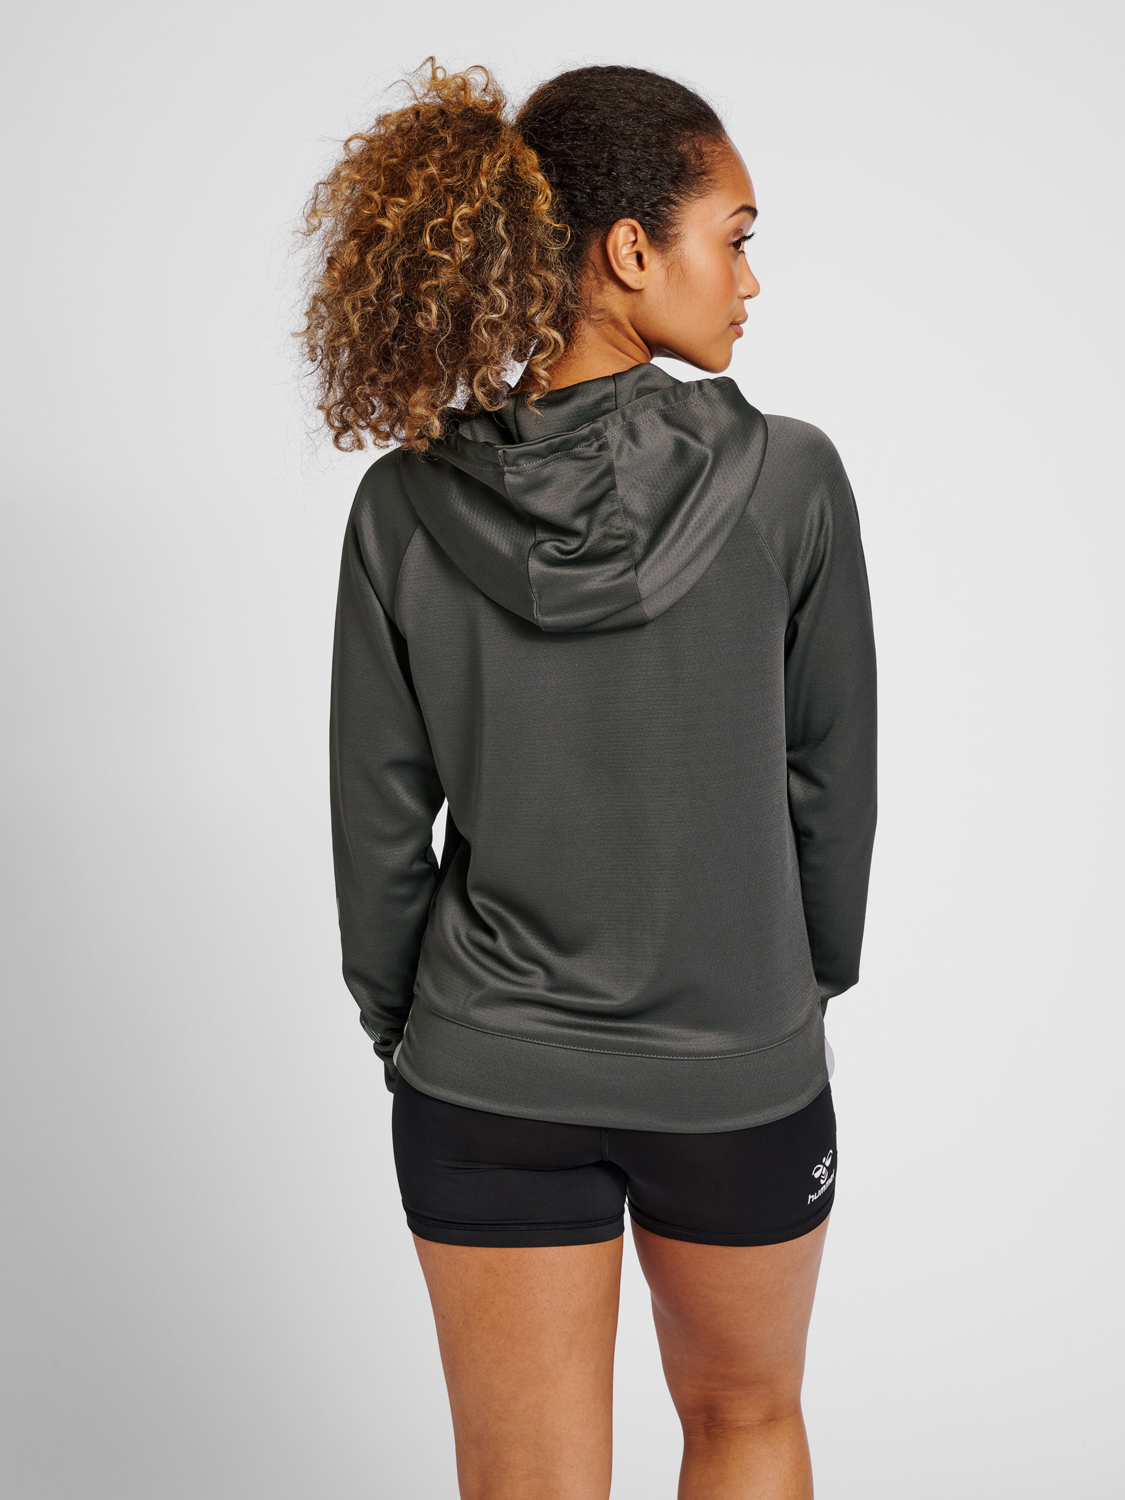 Details about   Hummel Womens Ladies Sport Training 1/2 Zip Sweatshirt Tracksuit Long Sleeve Top 